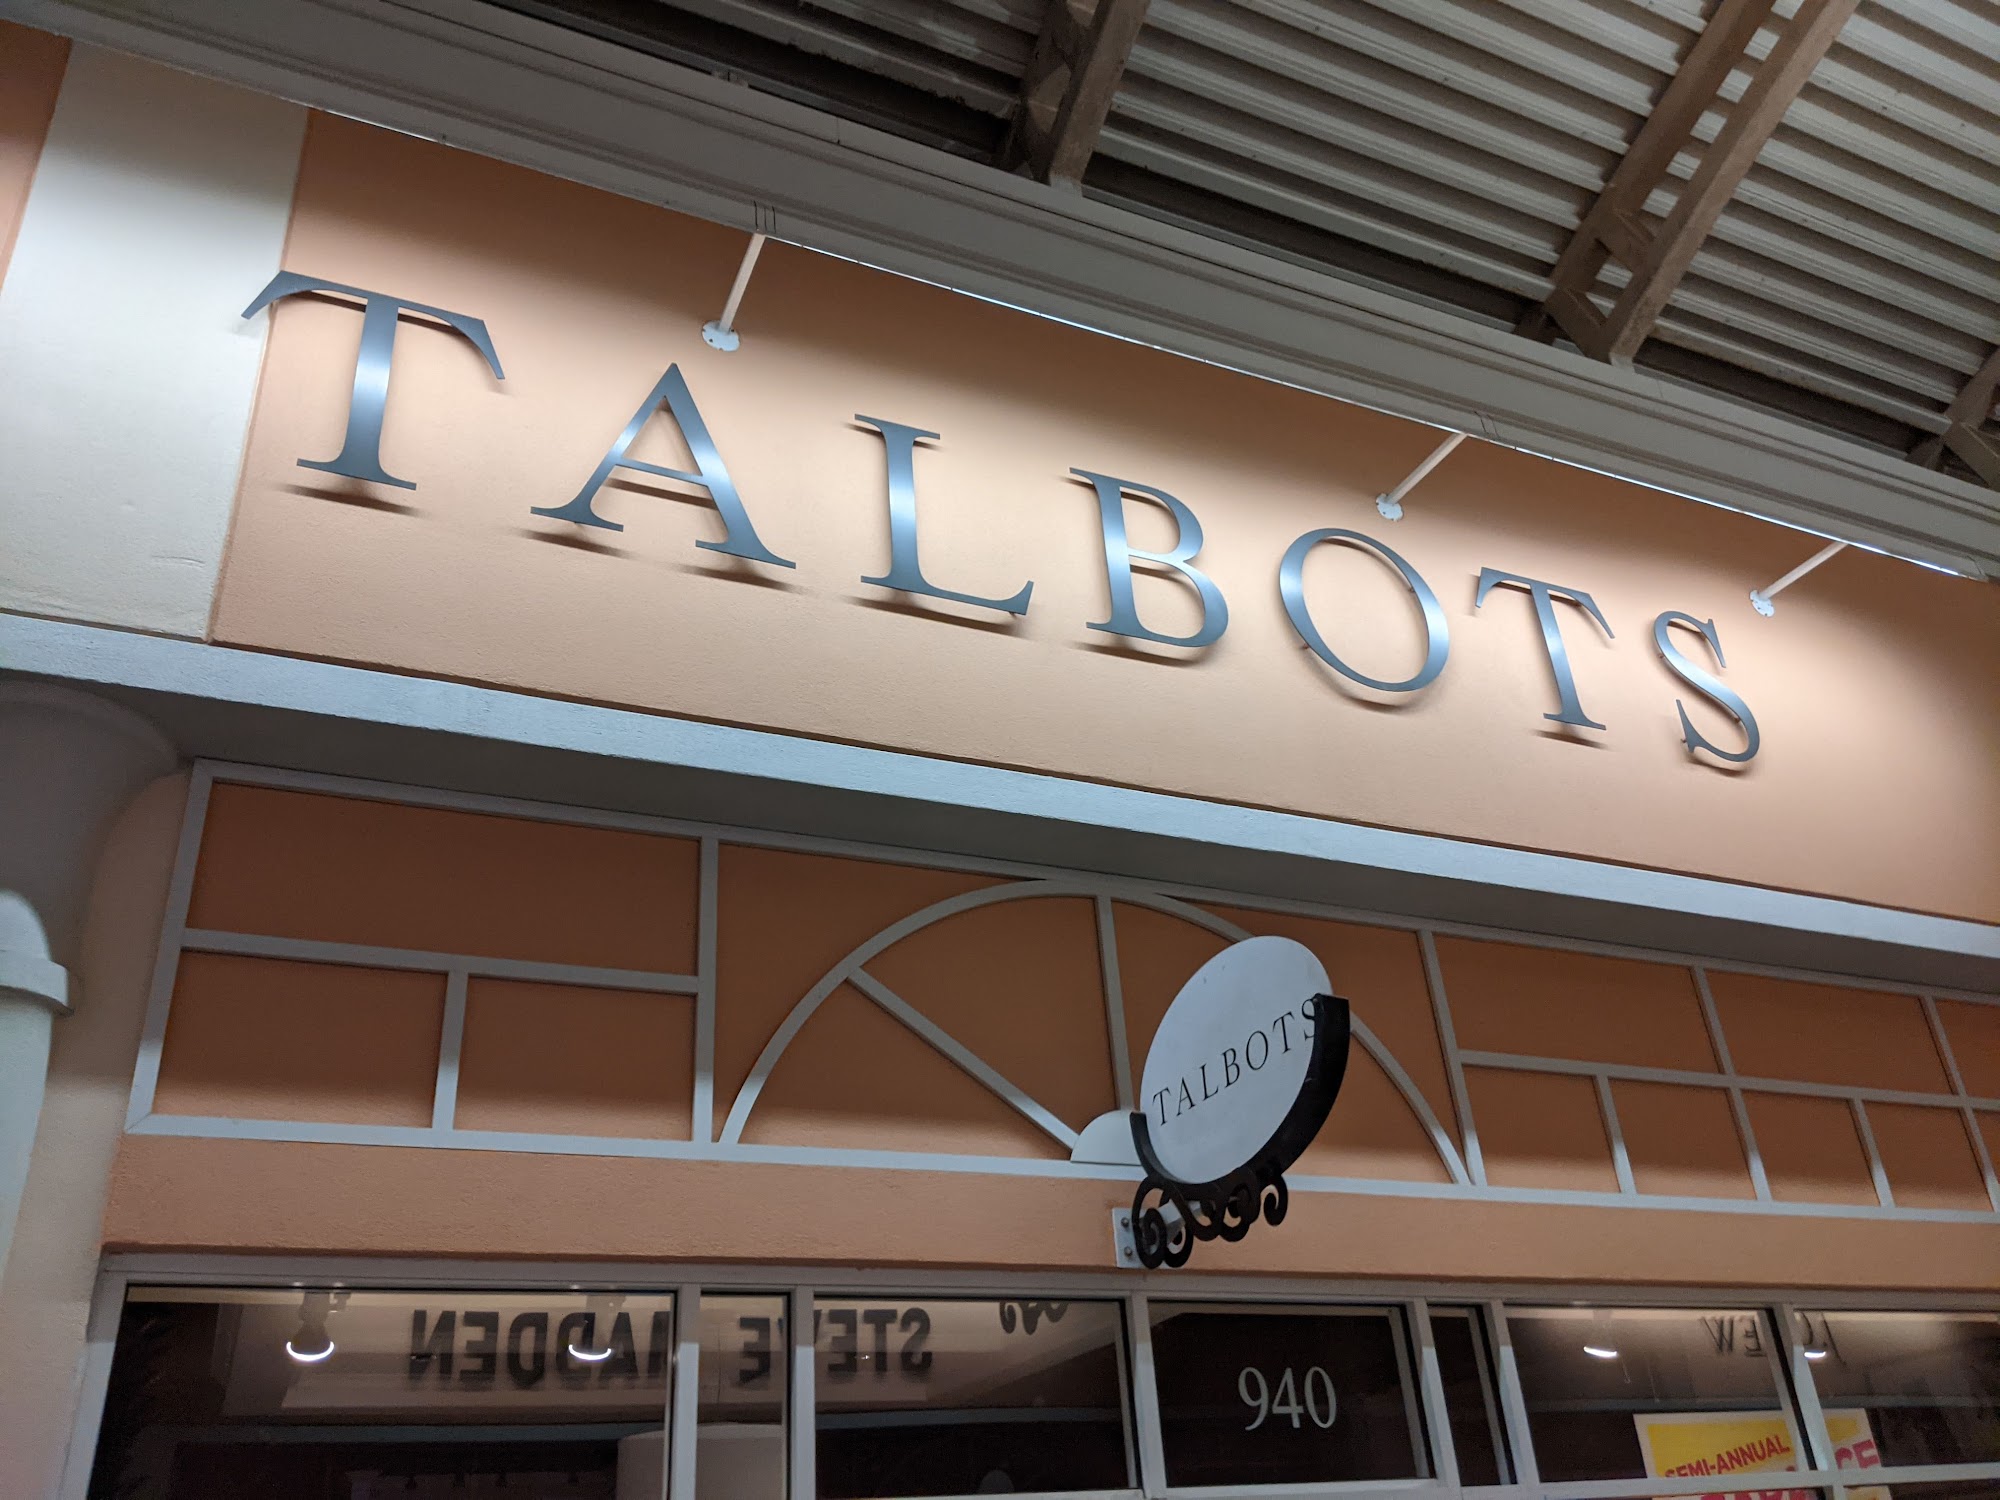 Talbots